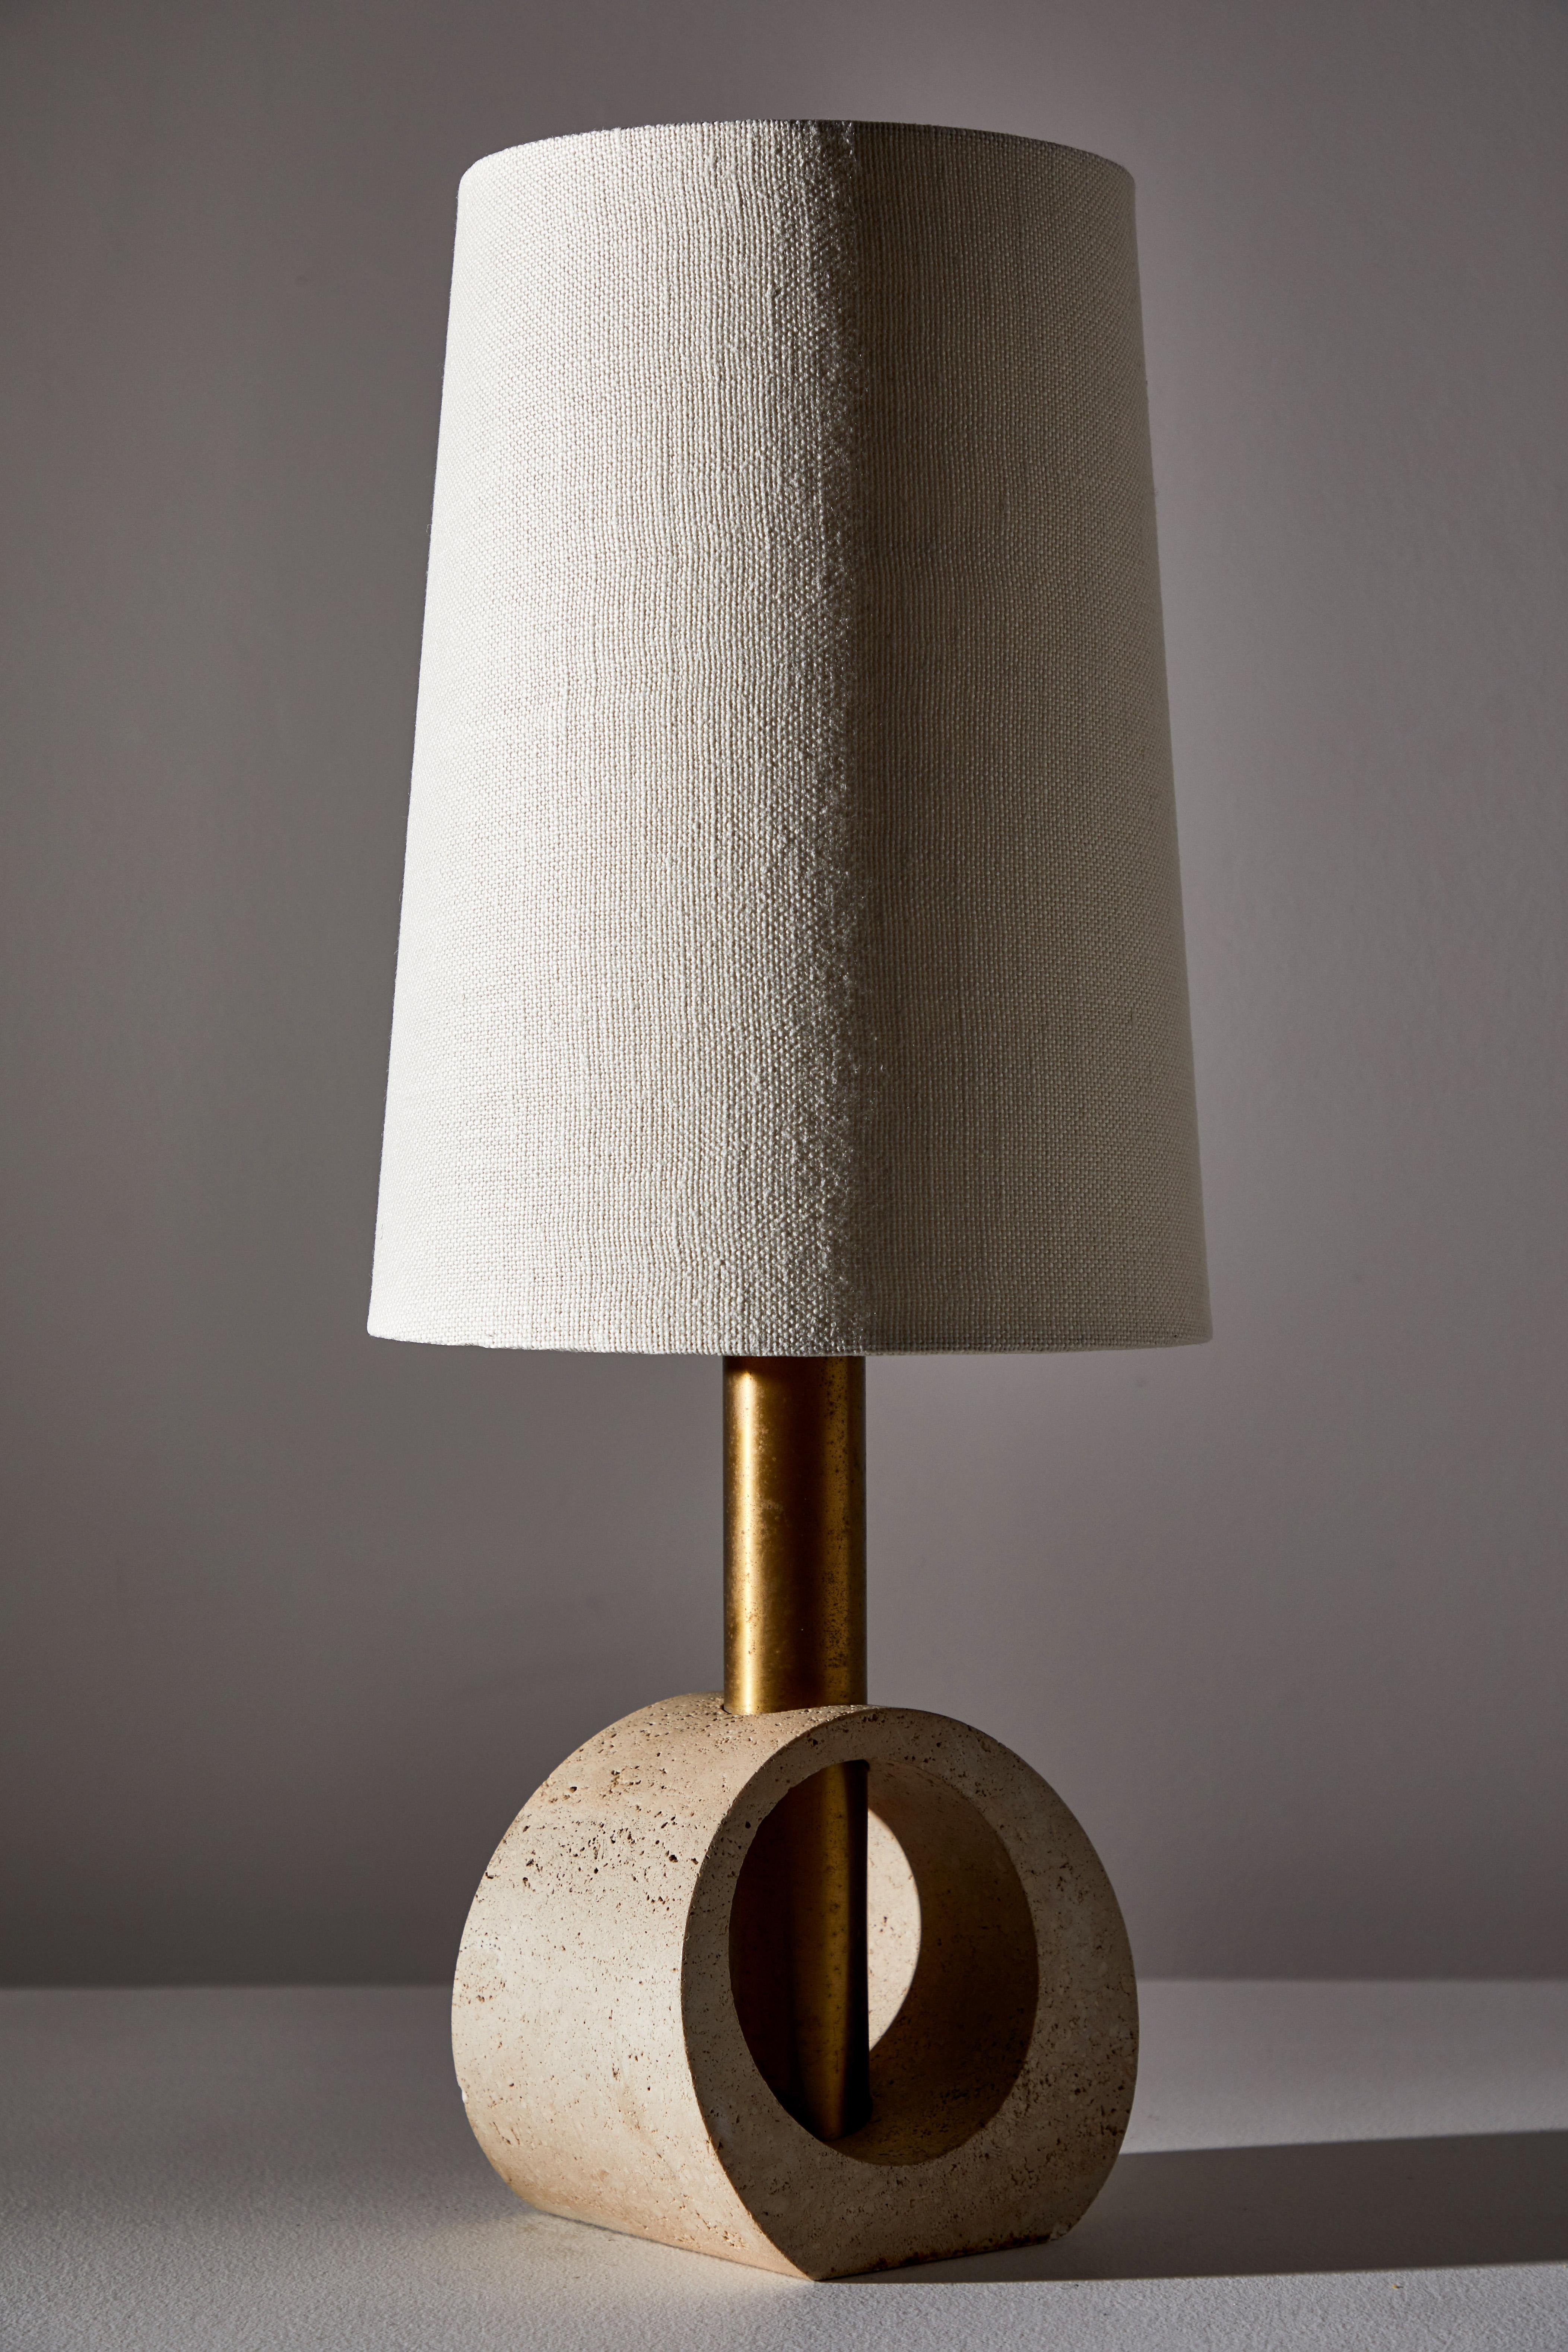 Late 20th Century Italian Travertine Table Lamp